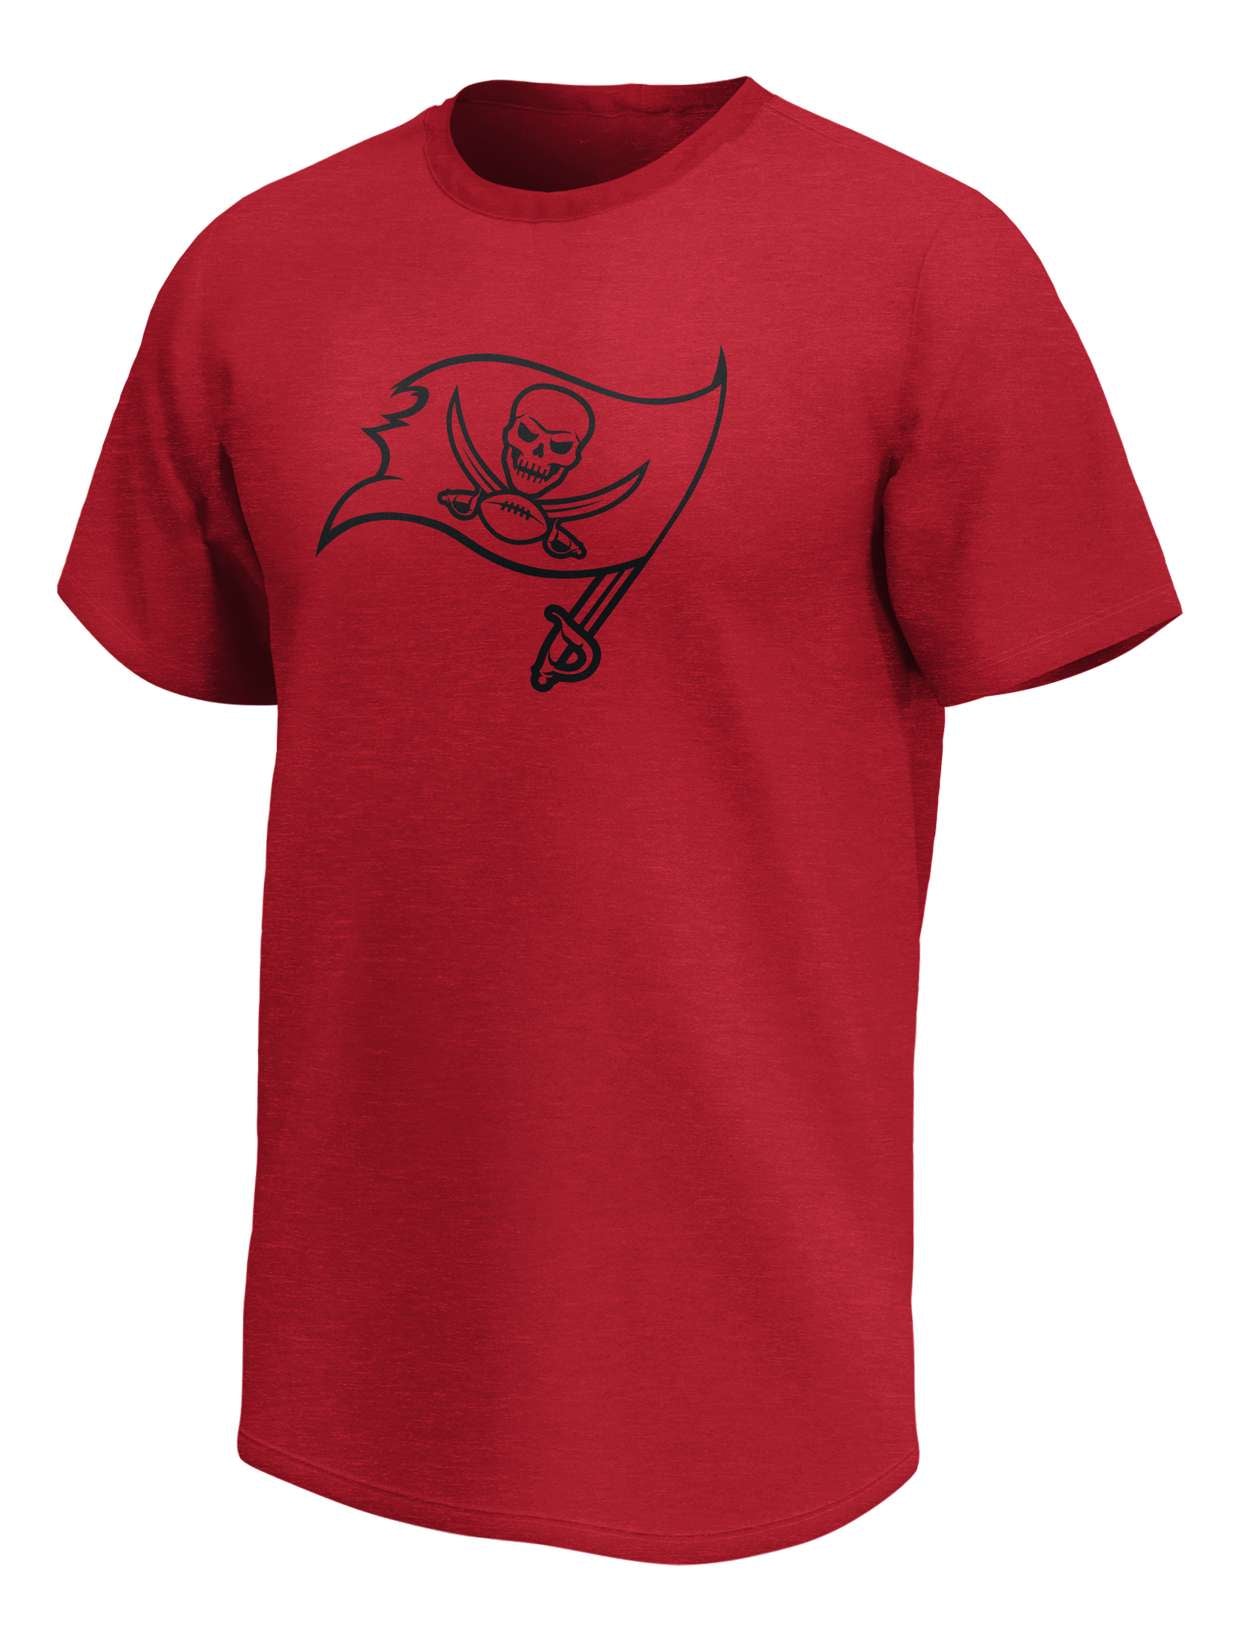 Fanatics - NFL Tampa Bay Buccaneers Mono Premium Graphic T-Shirt - Rot